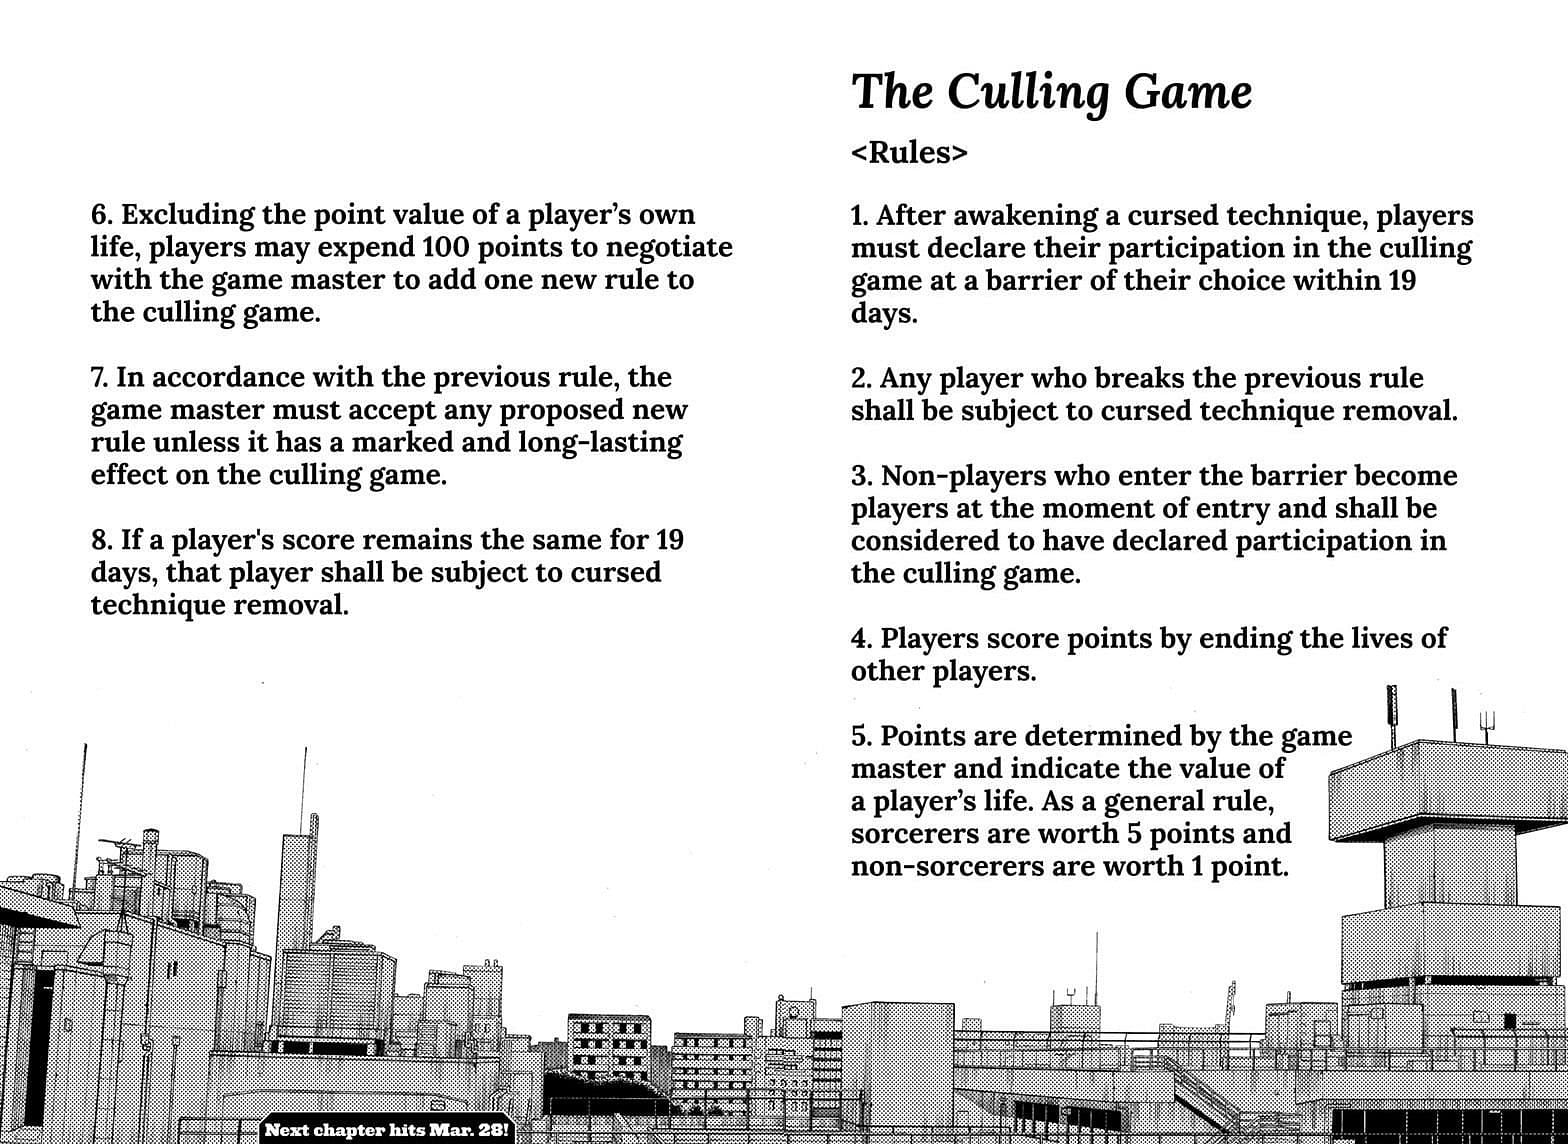 Rules of the Culling Game in Jujutsu Kaisen Manga (Image via Shueisha/Gege Akutami)